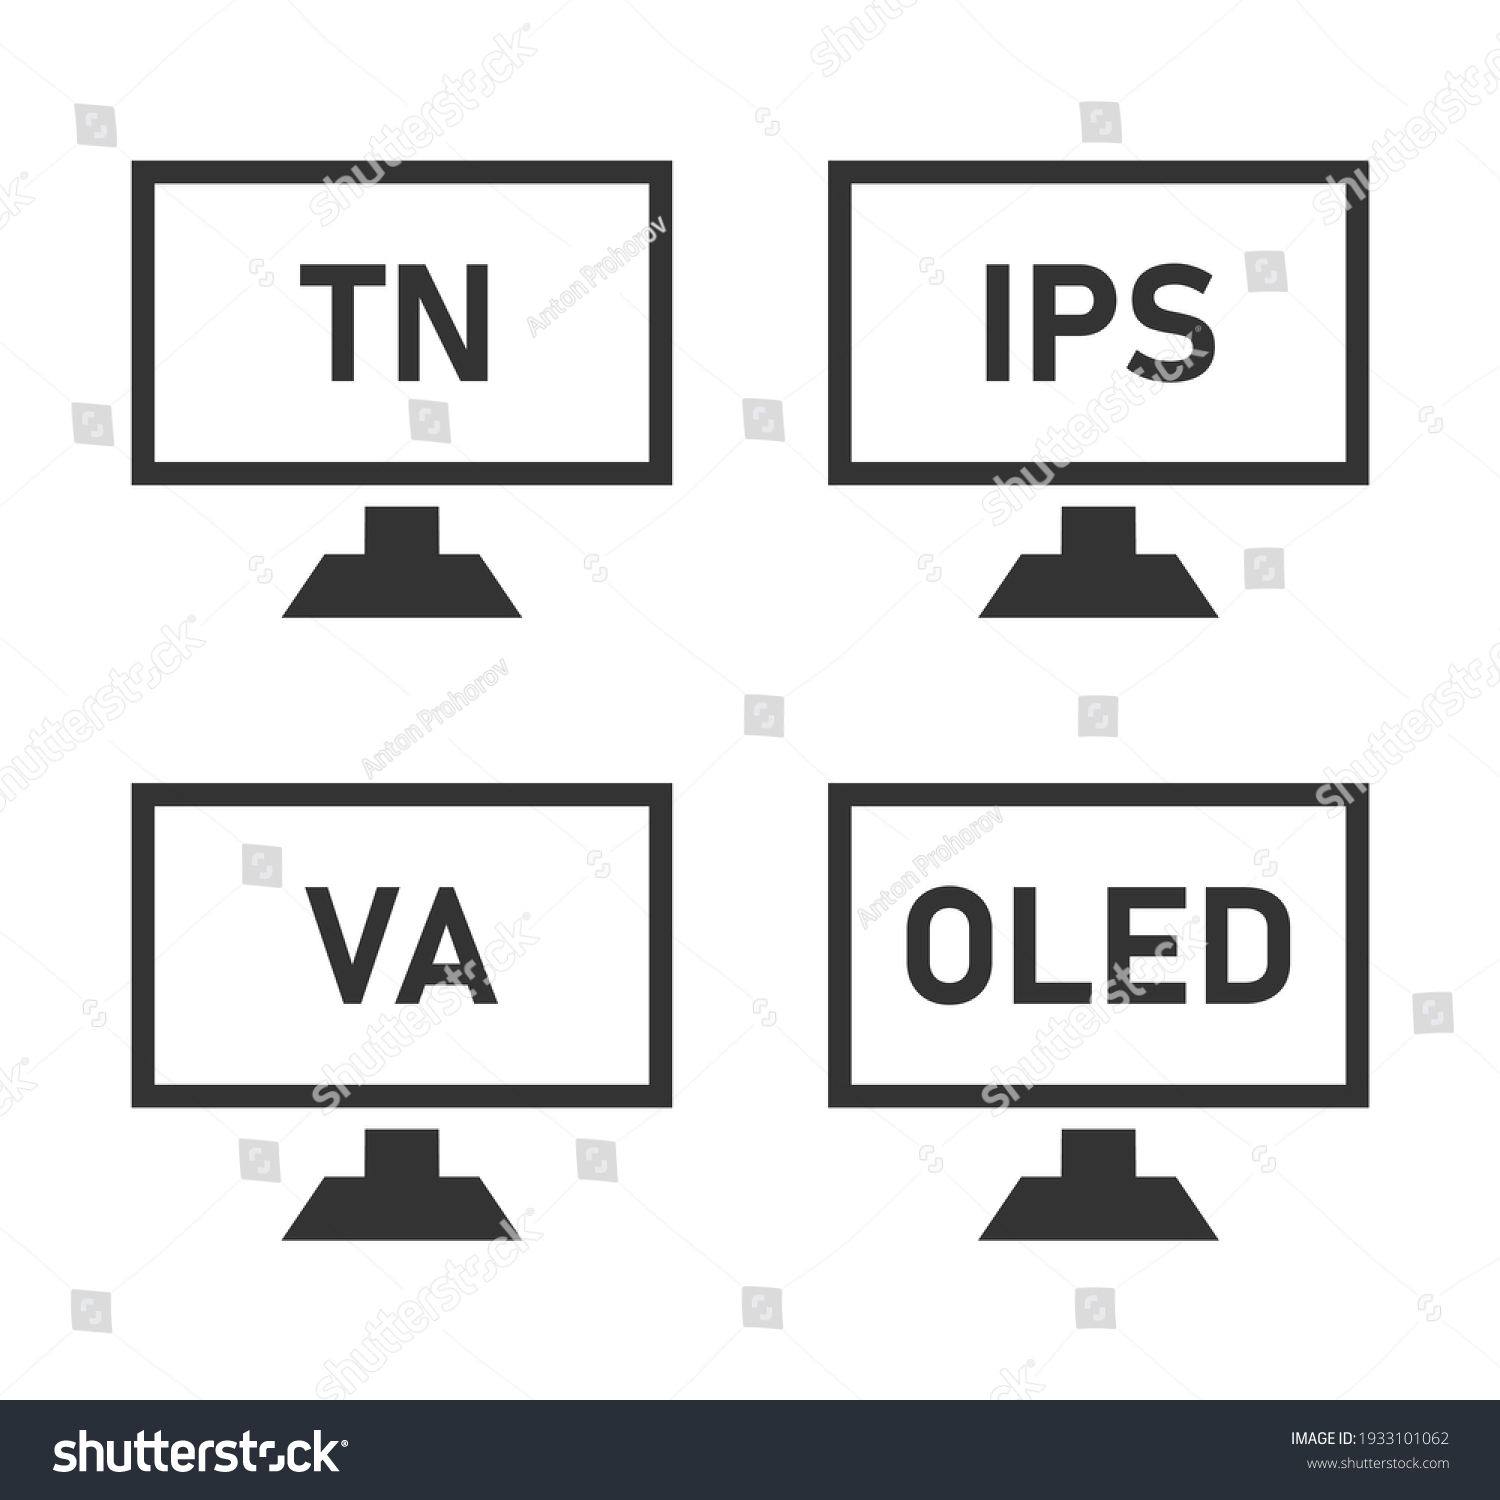 SVG of monitor matrix icon set, types of LCD matrices - IPS, VA, TN, OLED svg